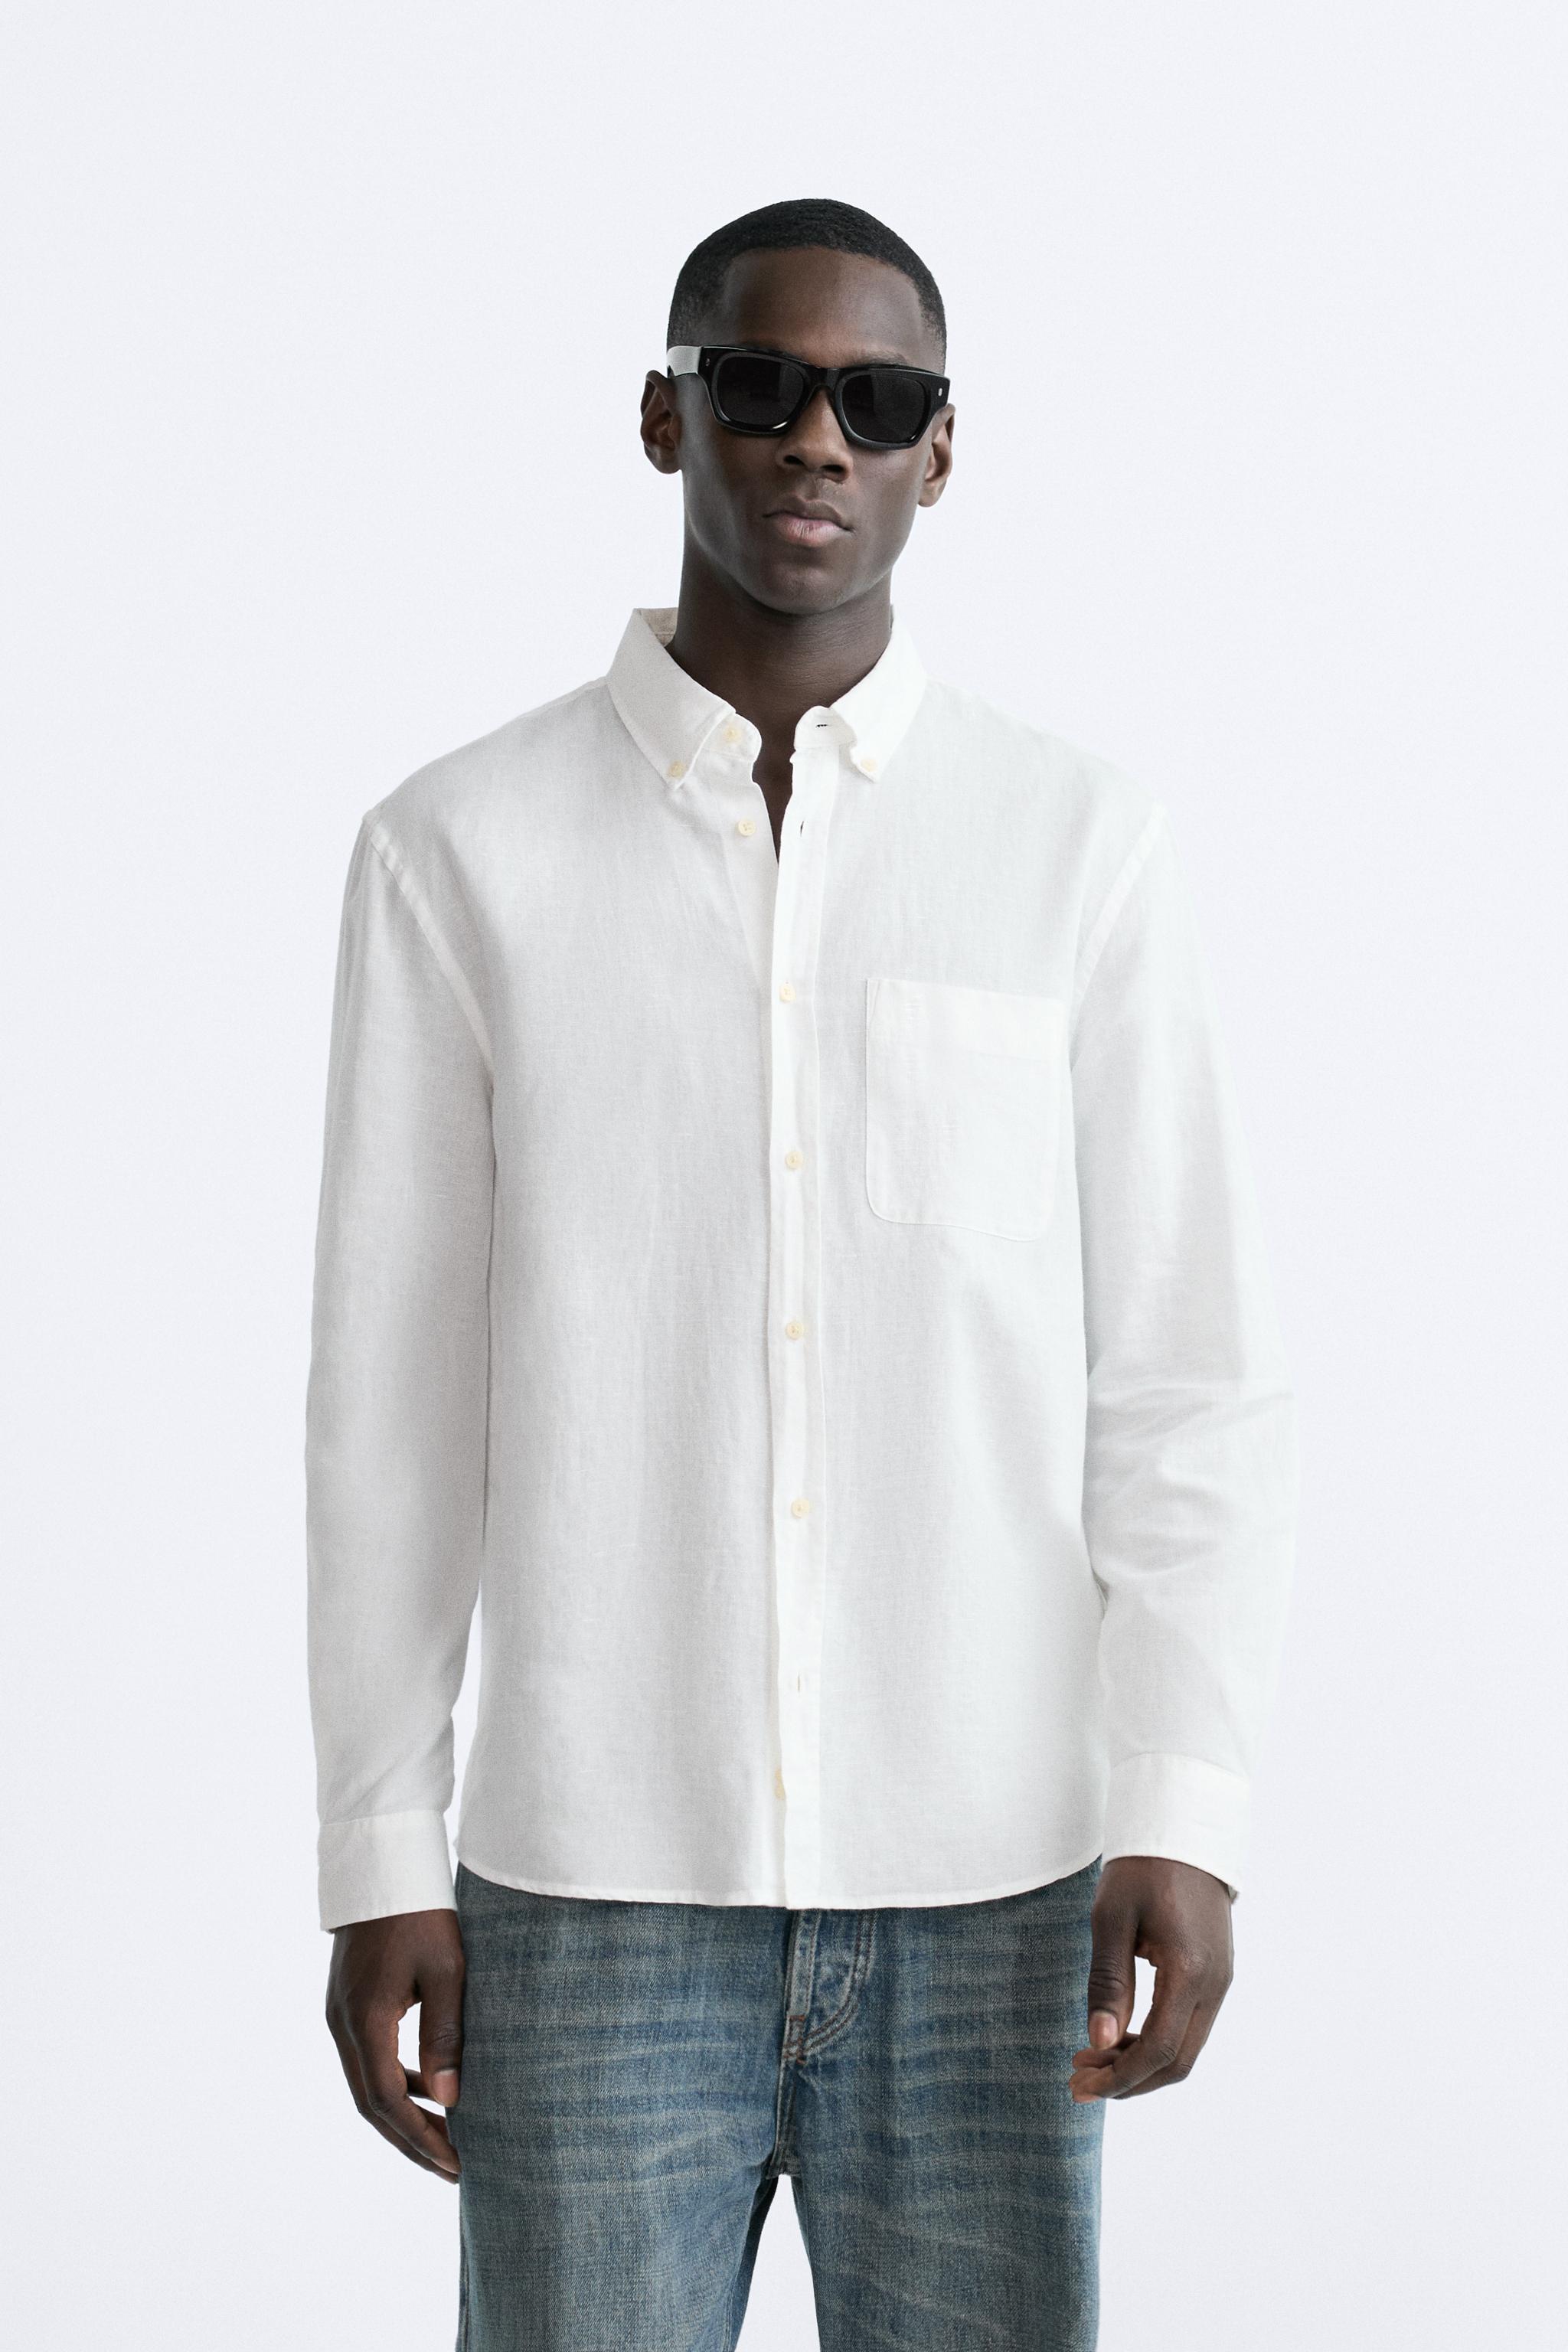 Zara Man Shirts New Collection Factory Sale | bellvalefarms.com